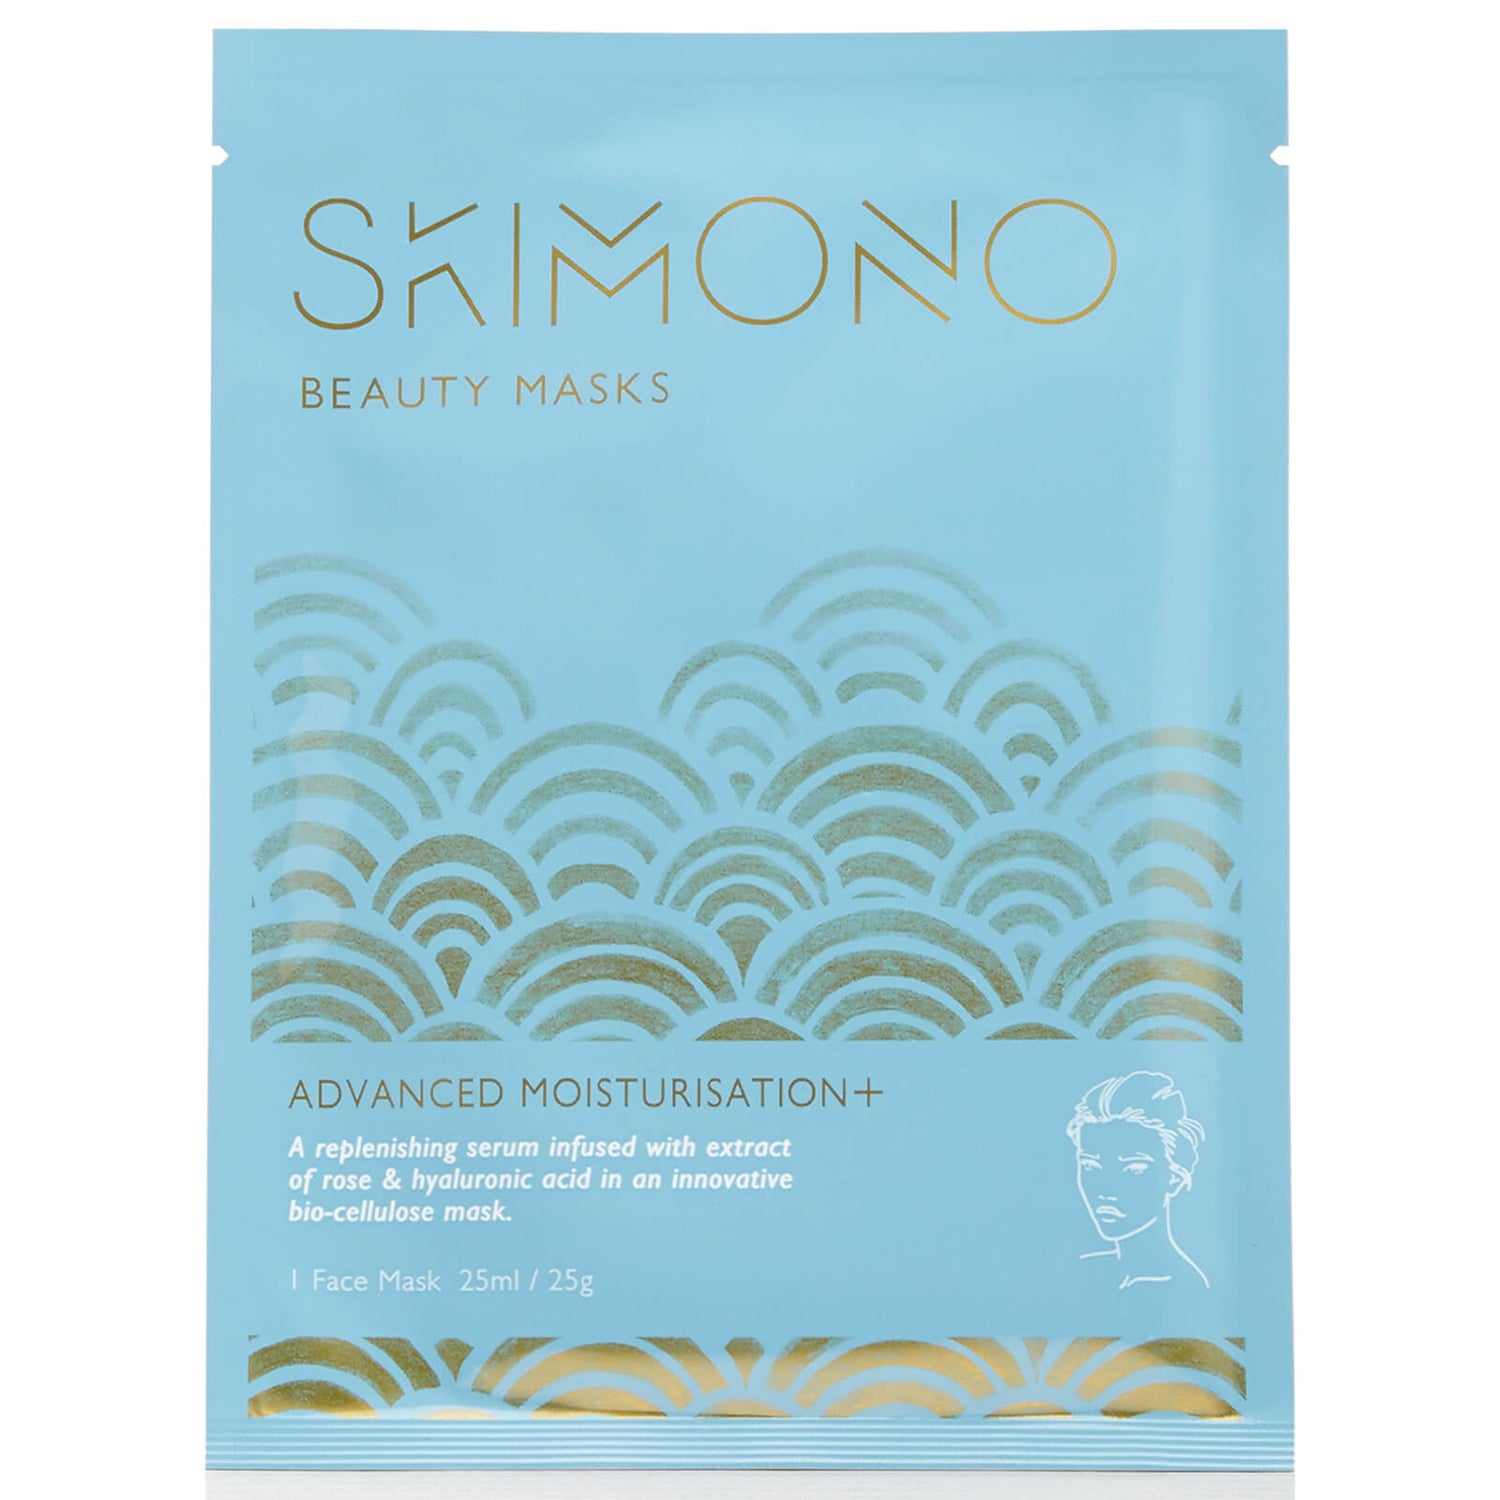 Skimono Beauty Face Mask for Advanced Moisturisation 25ml